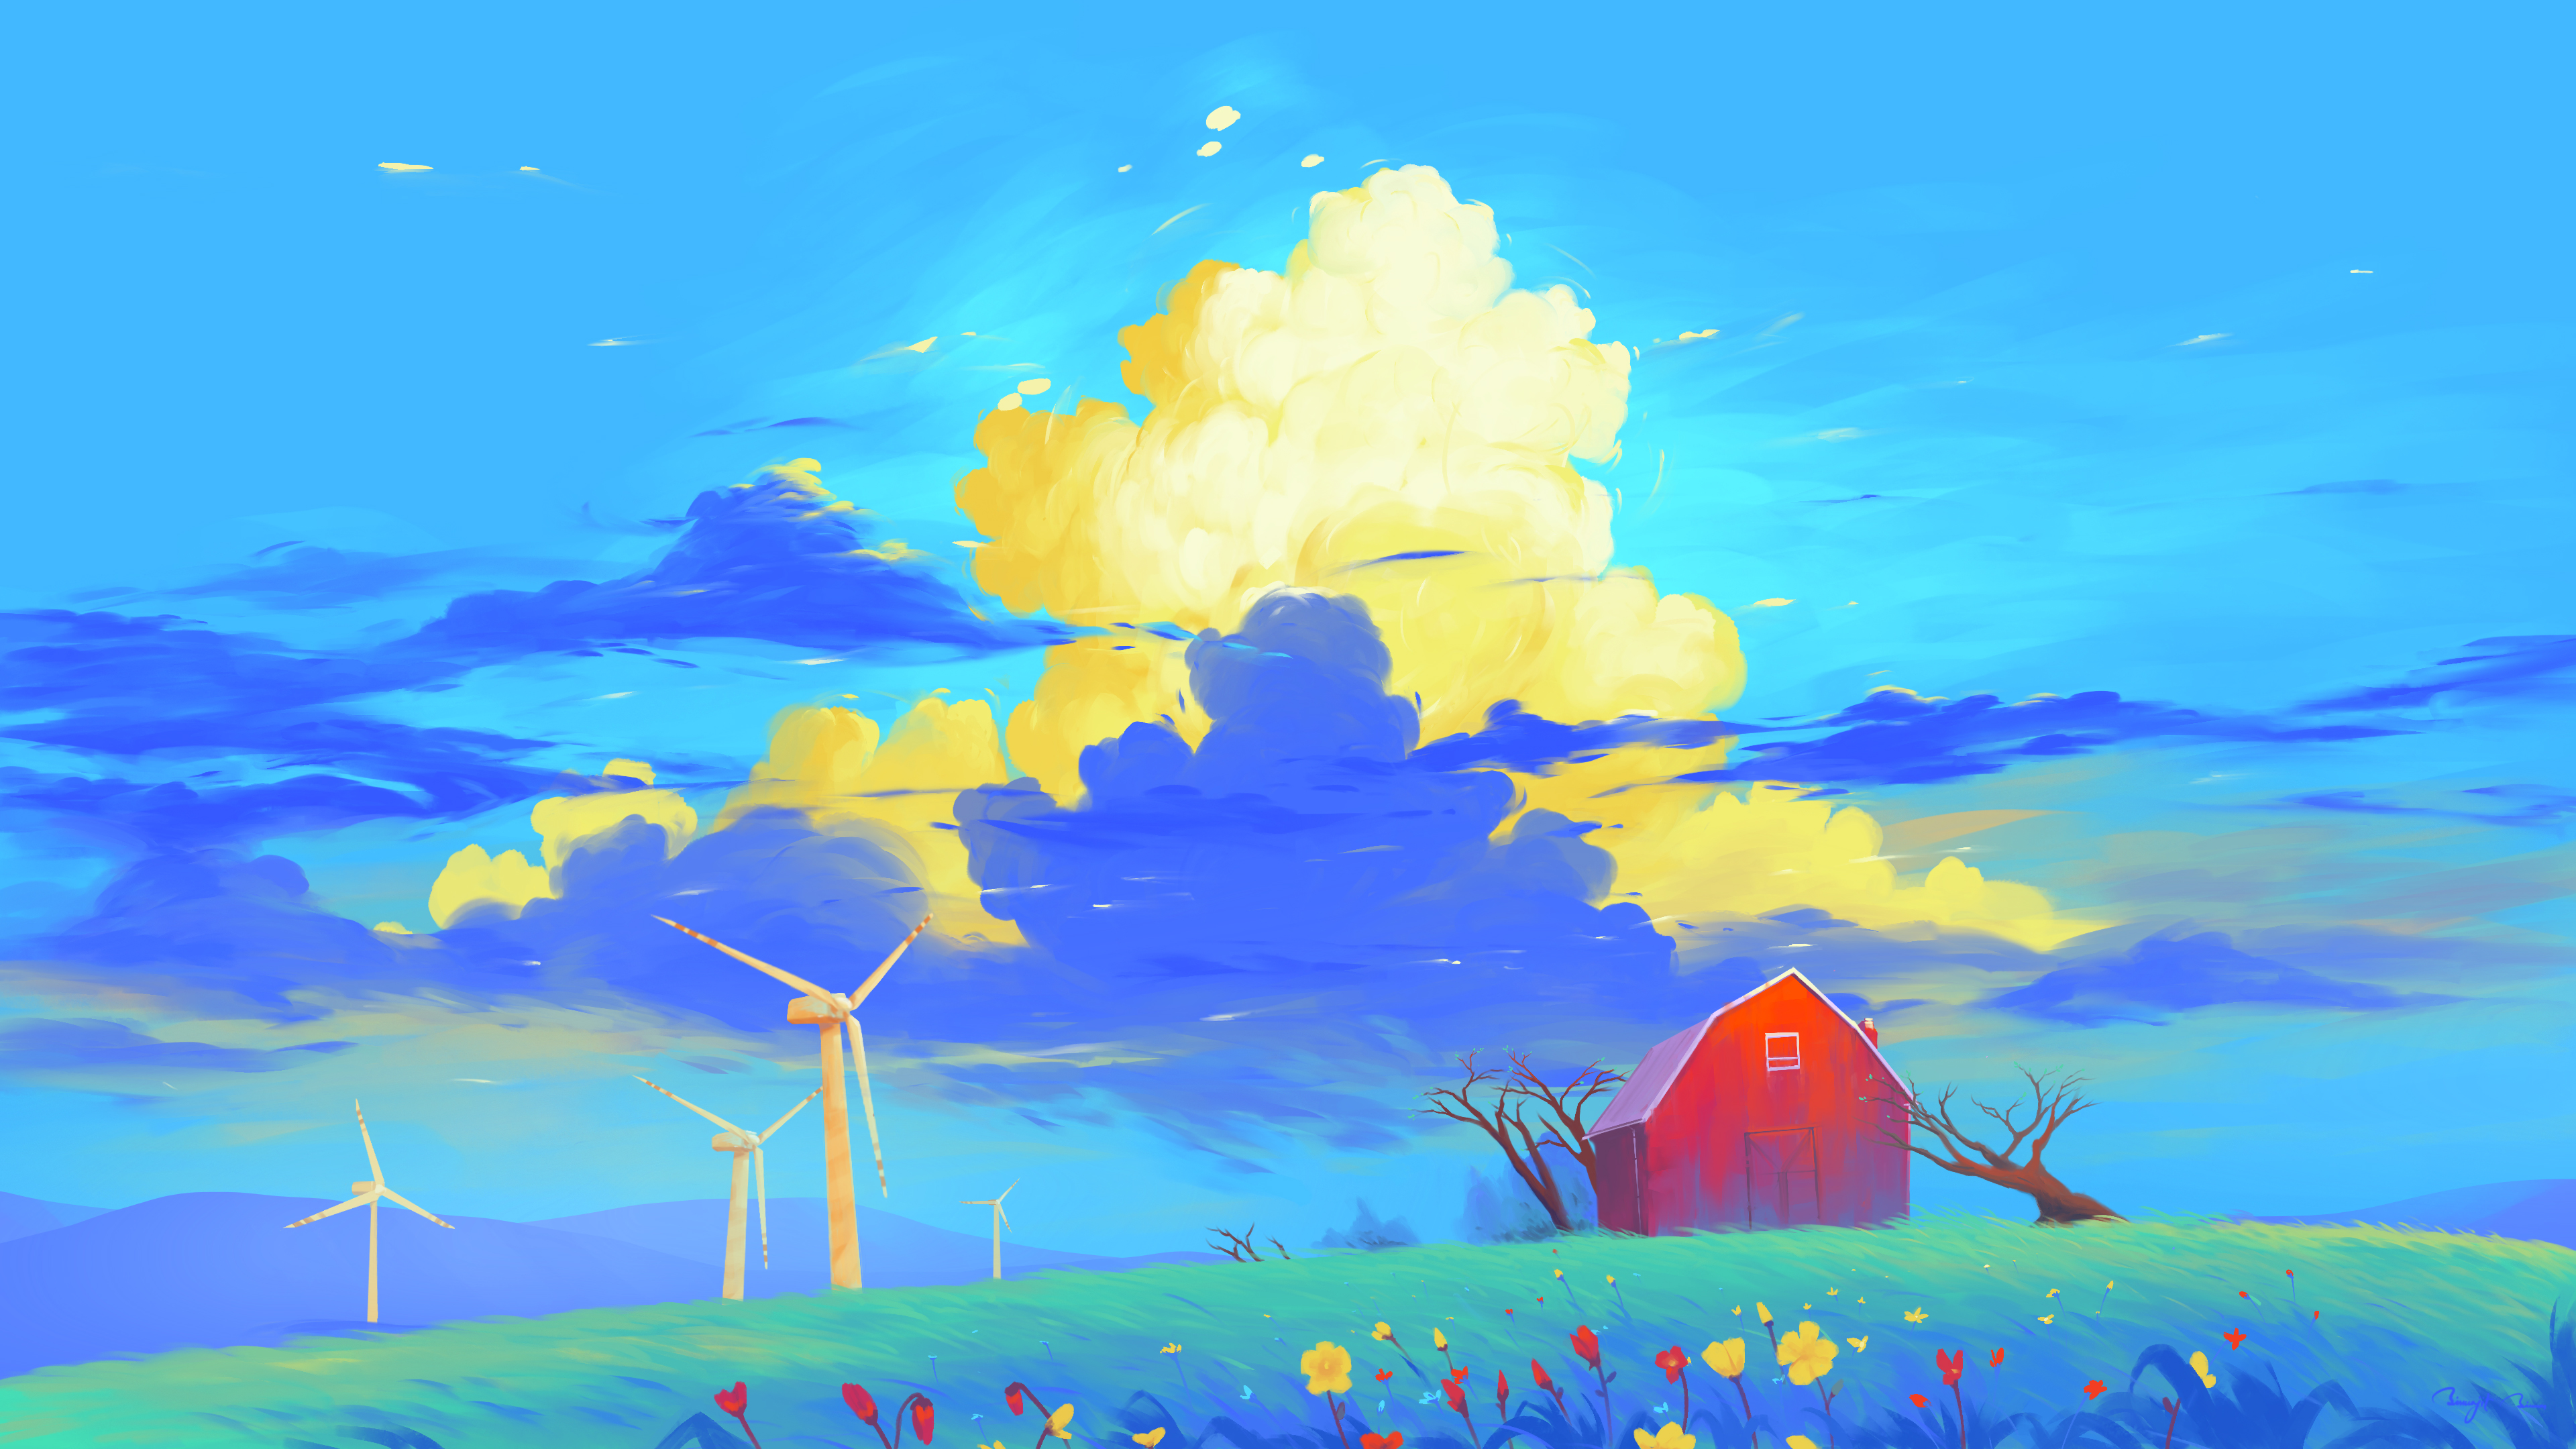 General 3840x2160 BisBiswas digital art artwork illustration landscape nature colorful clouds field trees flowers plants signature wind turbine sky 4K